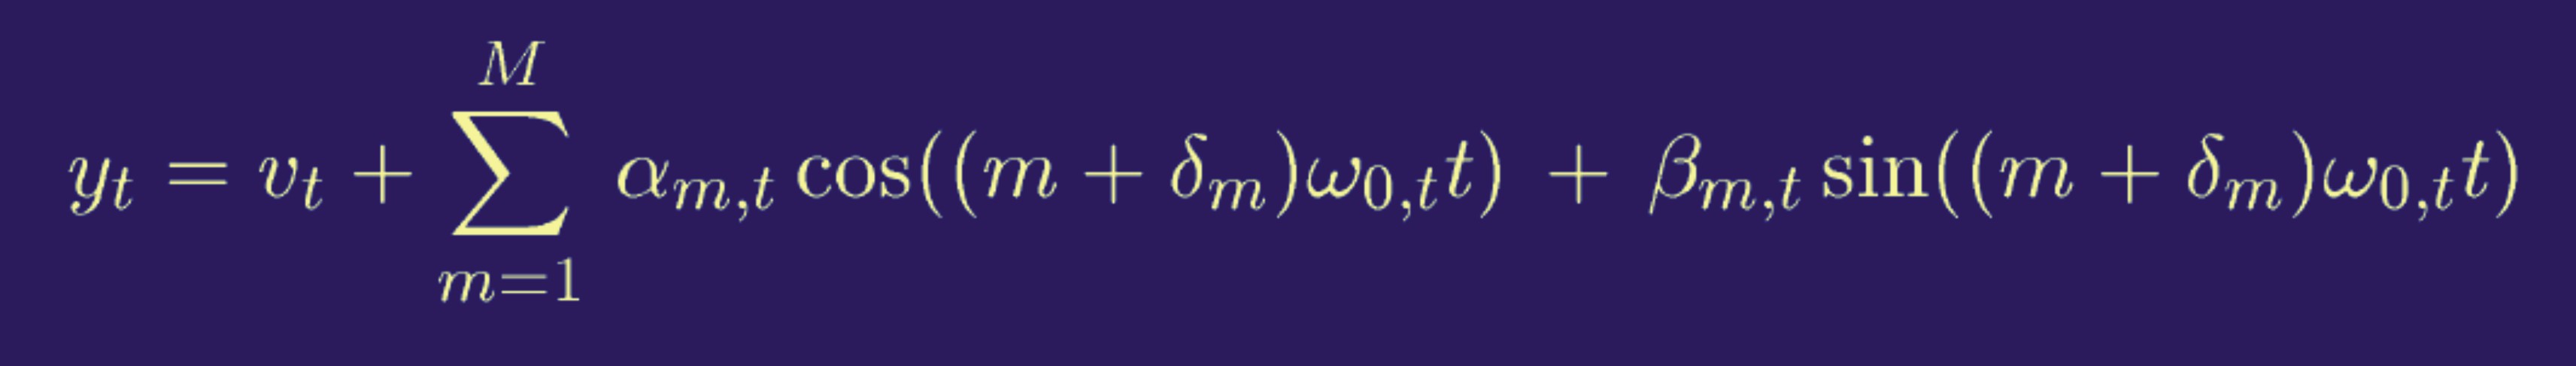 harmonic model formula